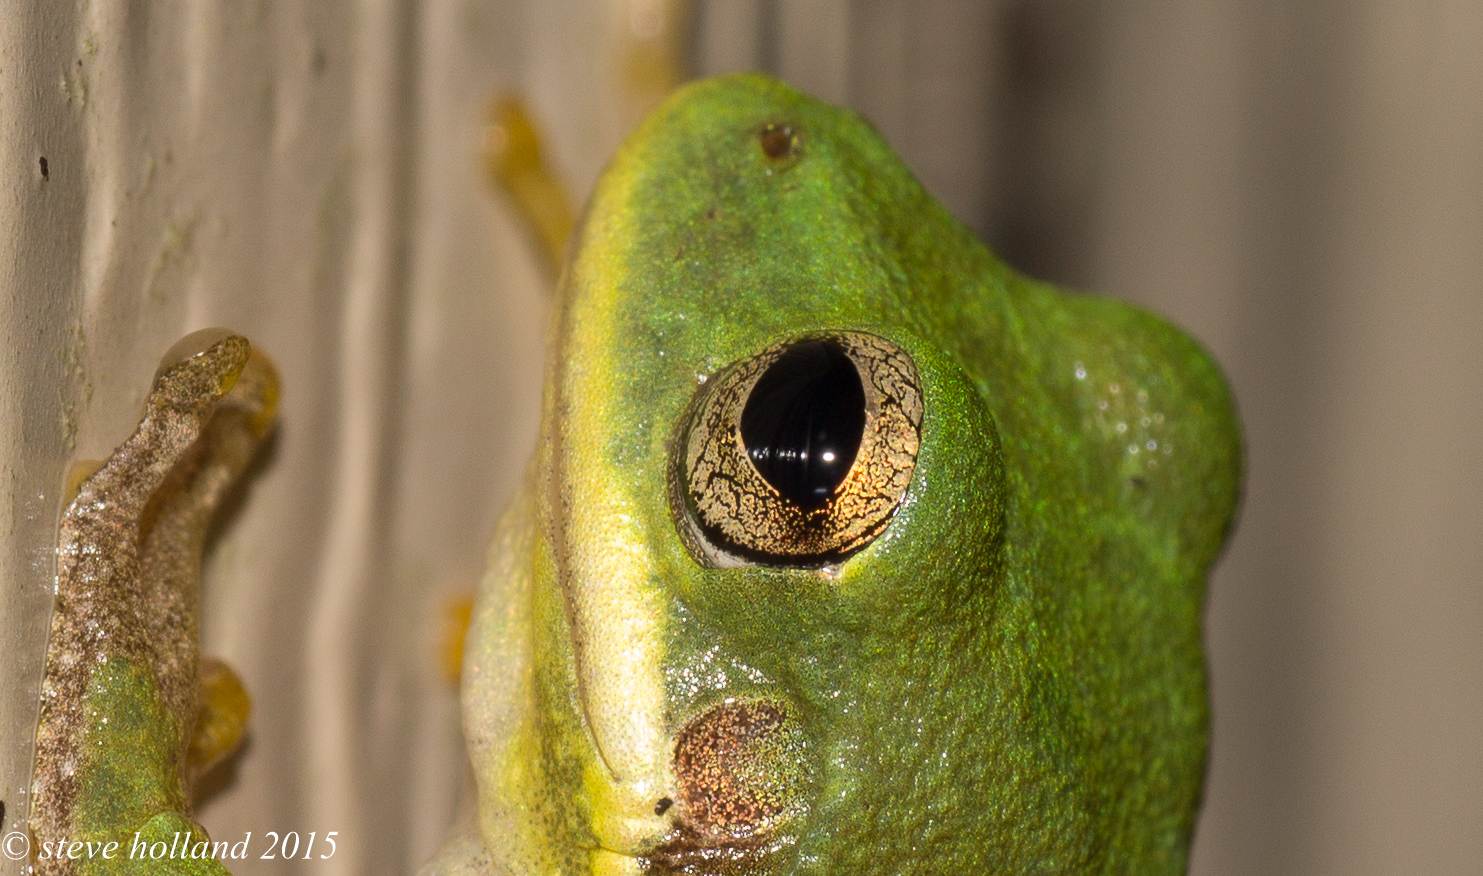 frog (1 of 2).jpg  by Steve Holland